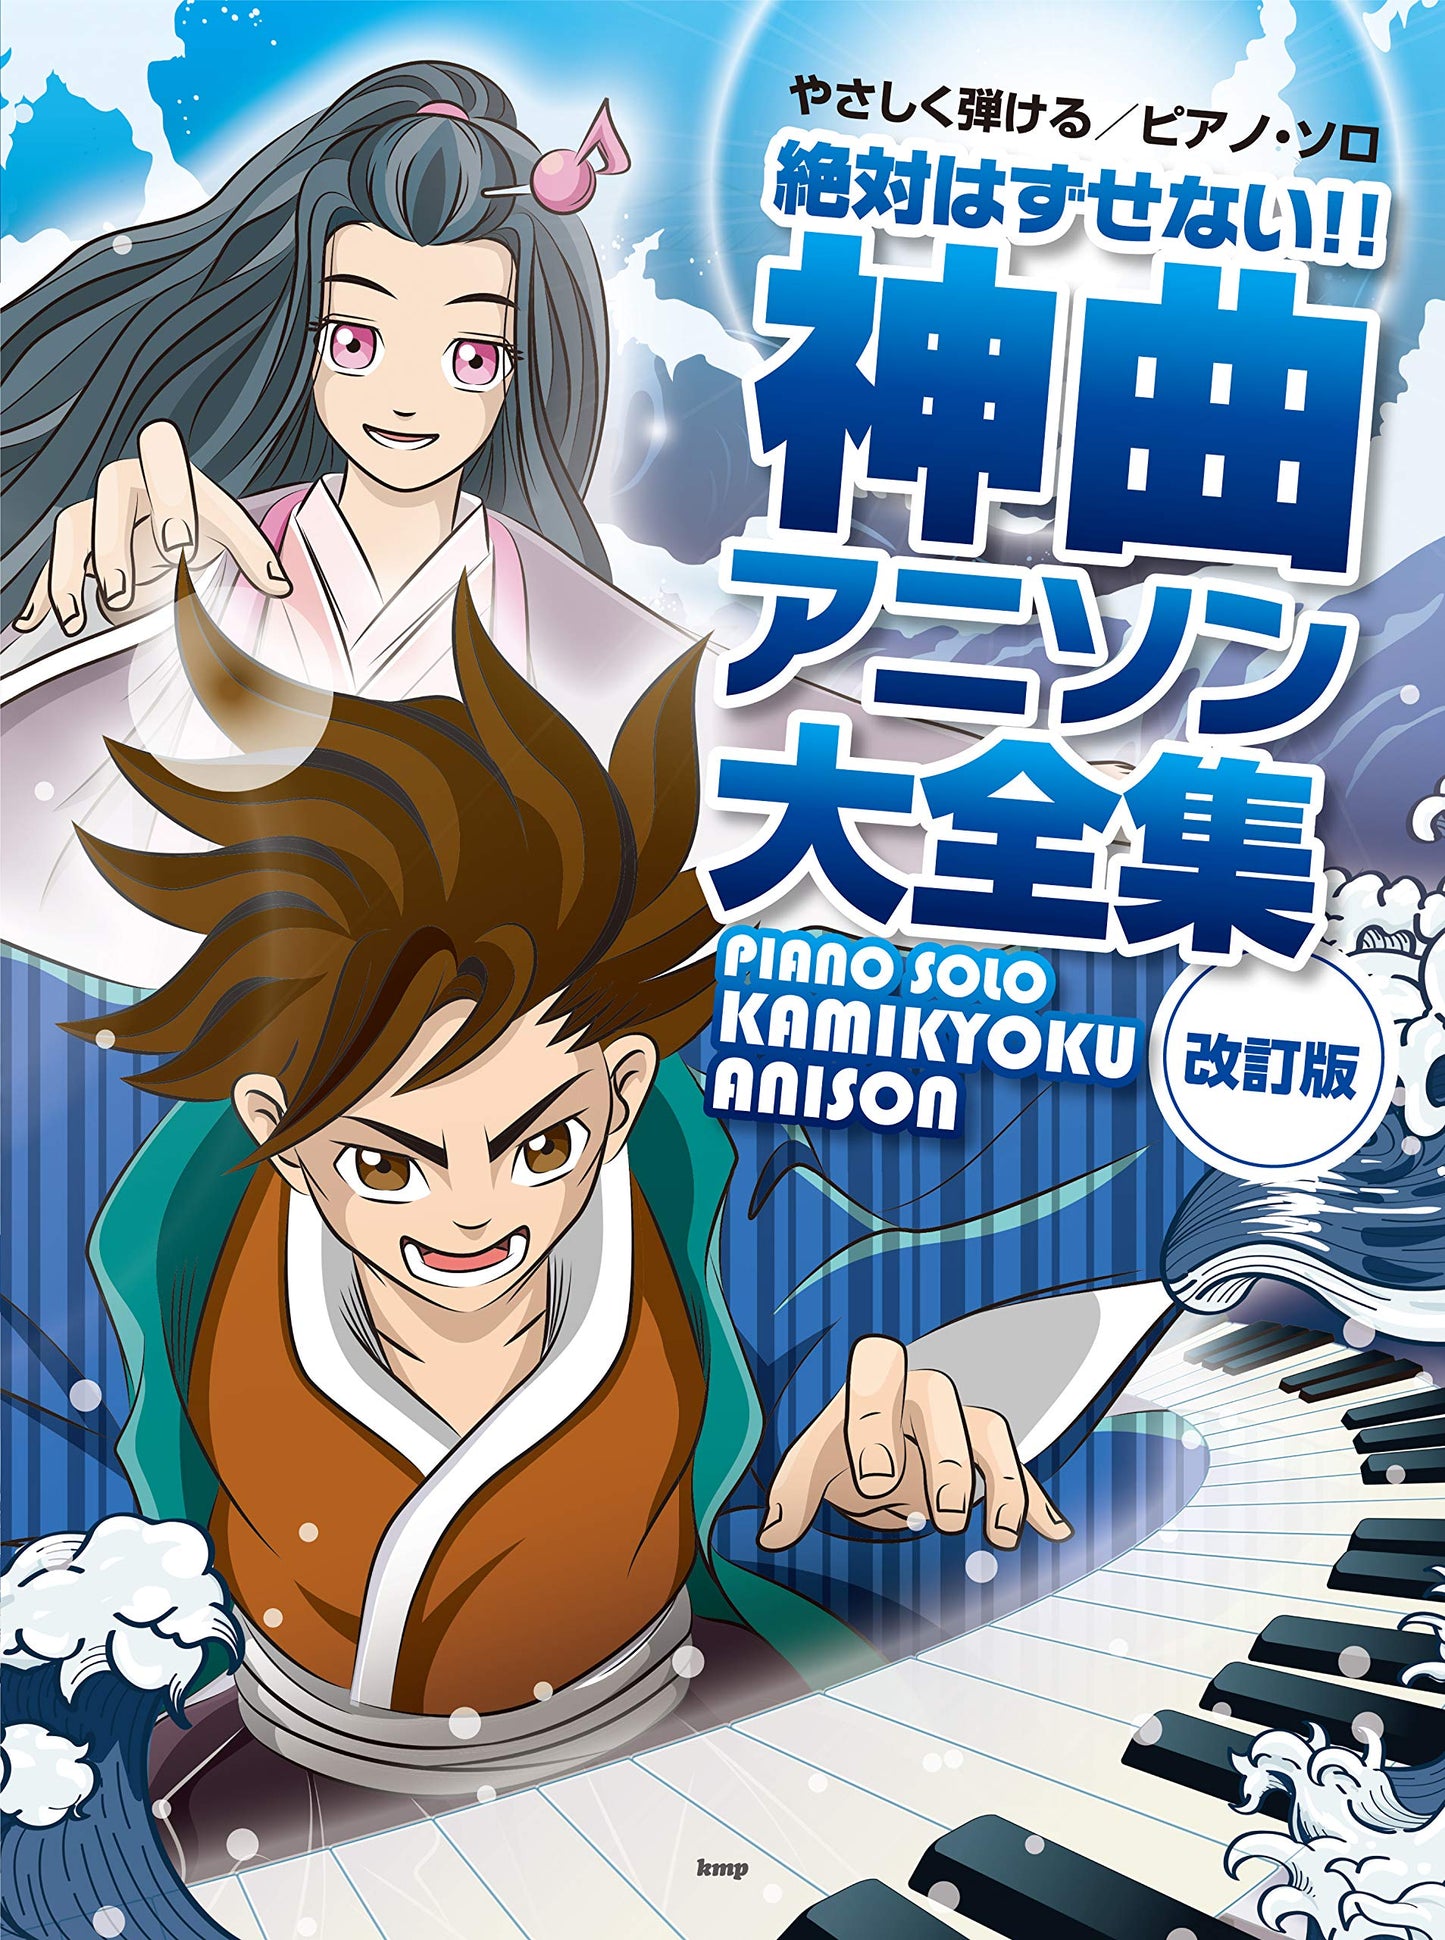 Kamikyoku Anime 73 Songs(Anison) Collection Easy Piano Solo